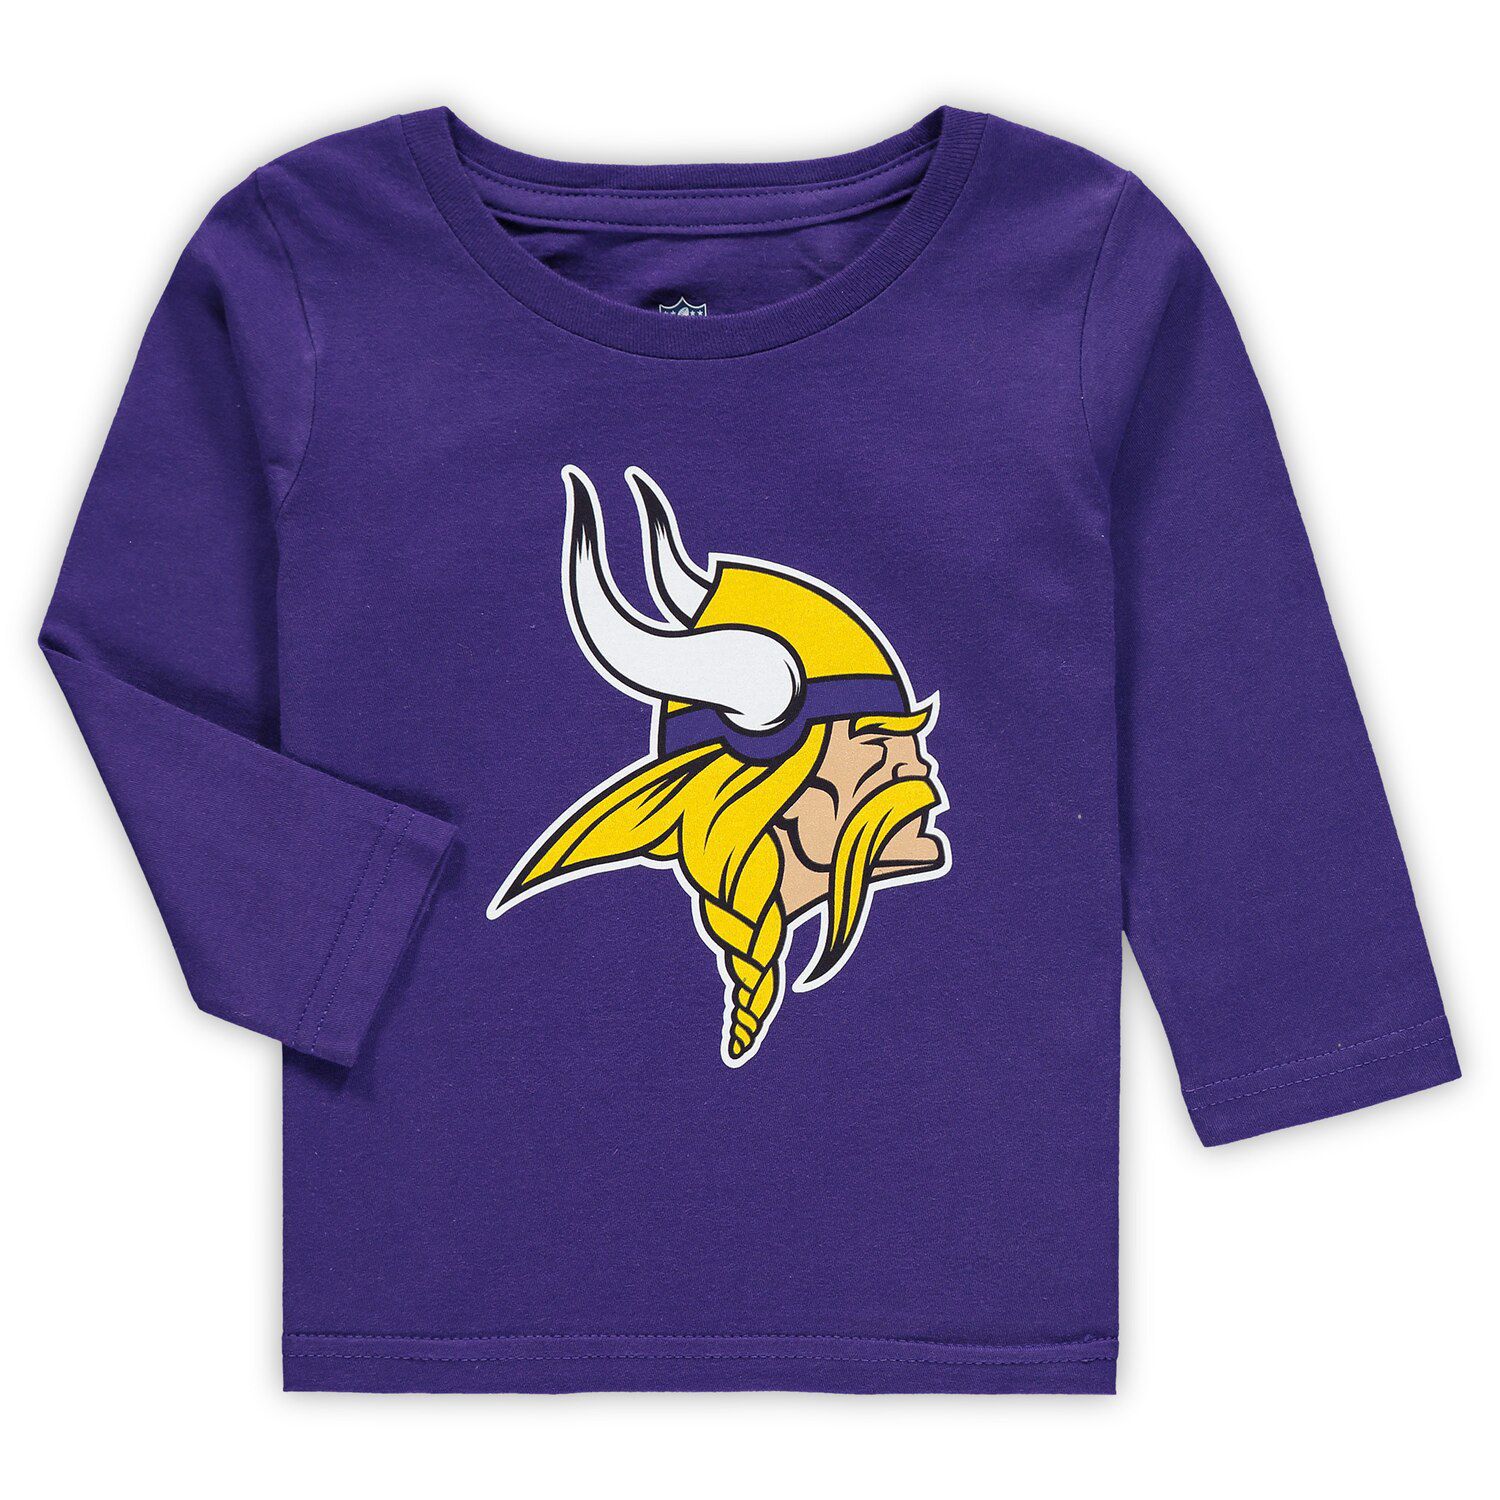 Minnesota Vikings Kids Clothing | Kohl's